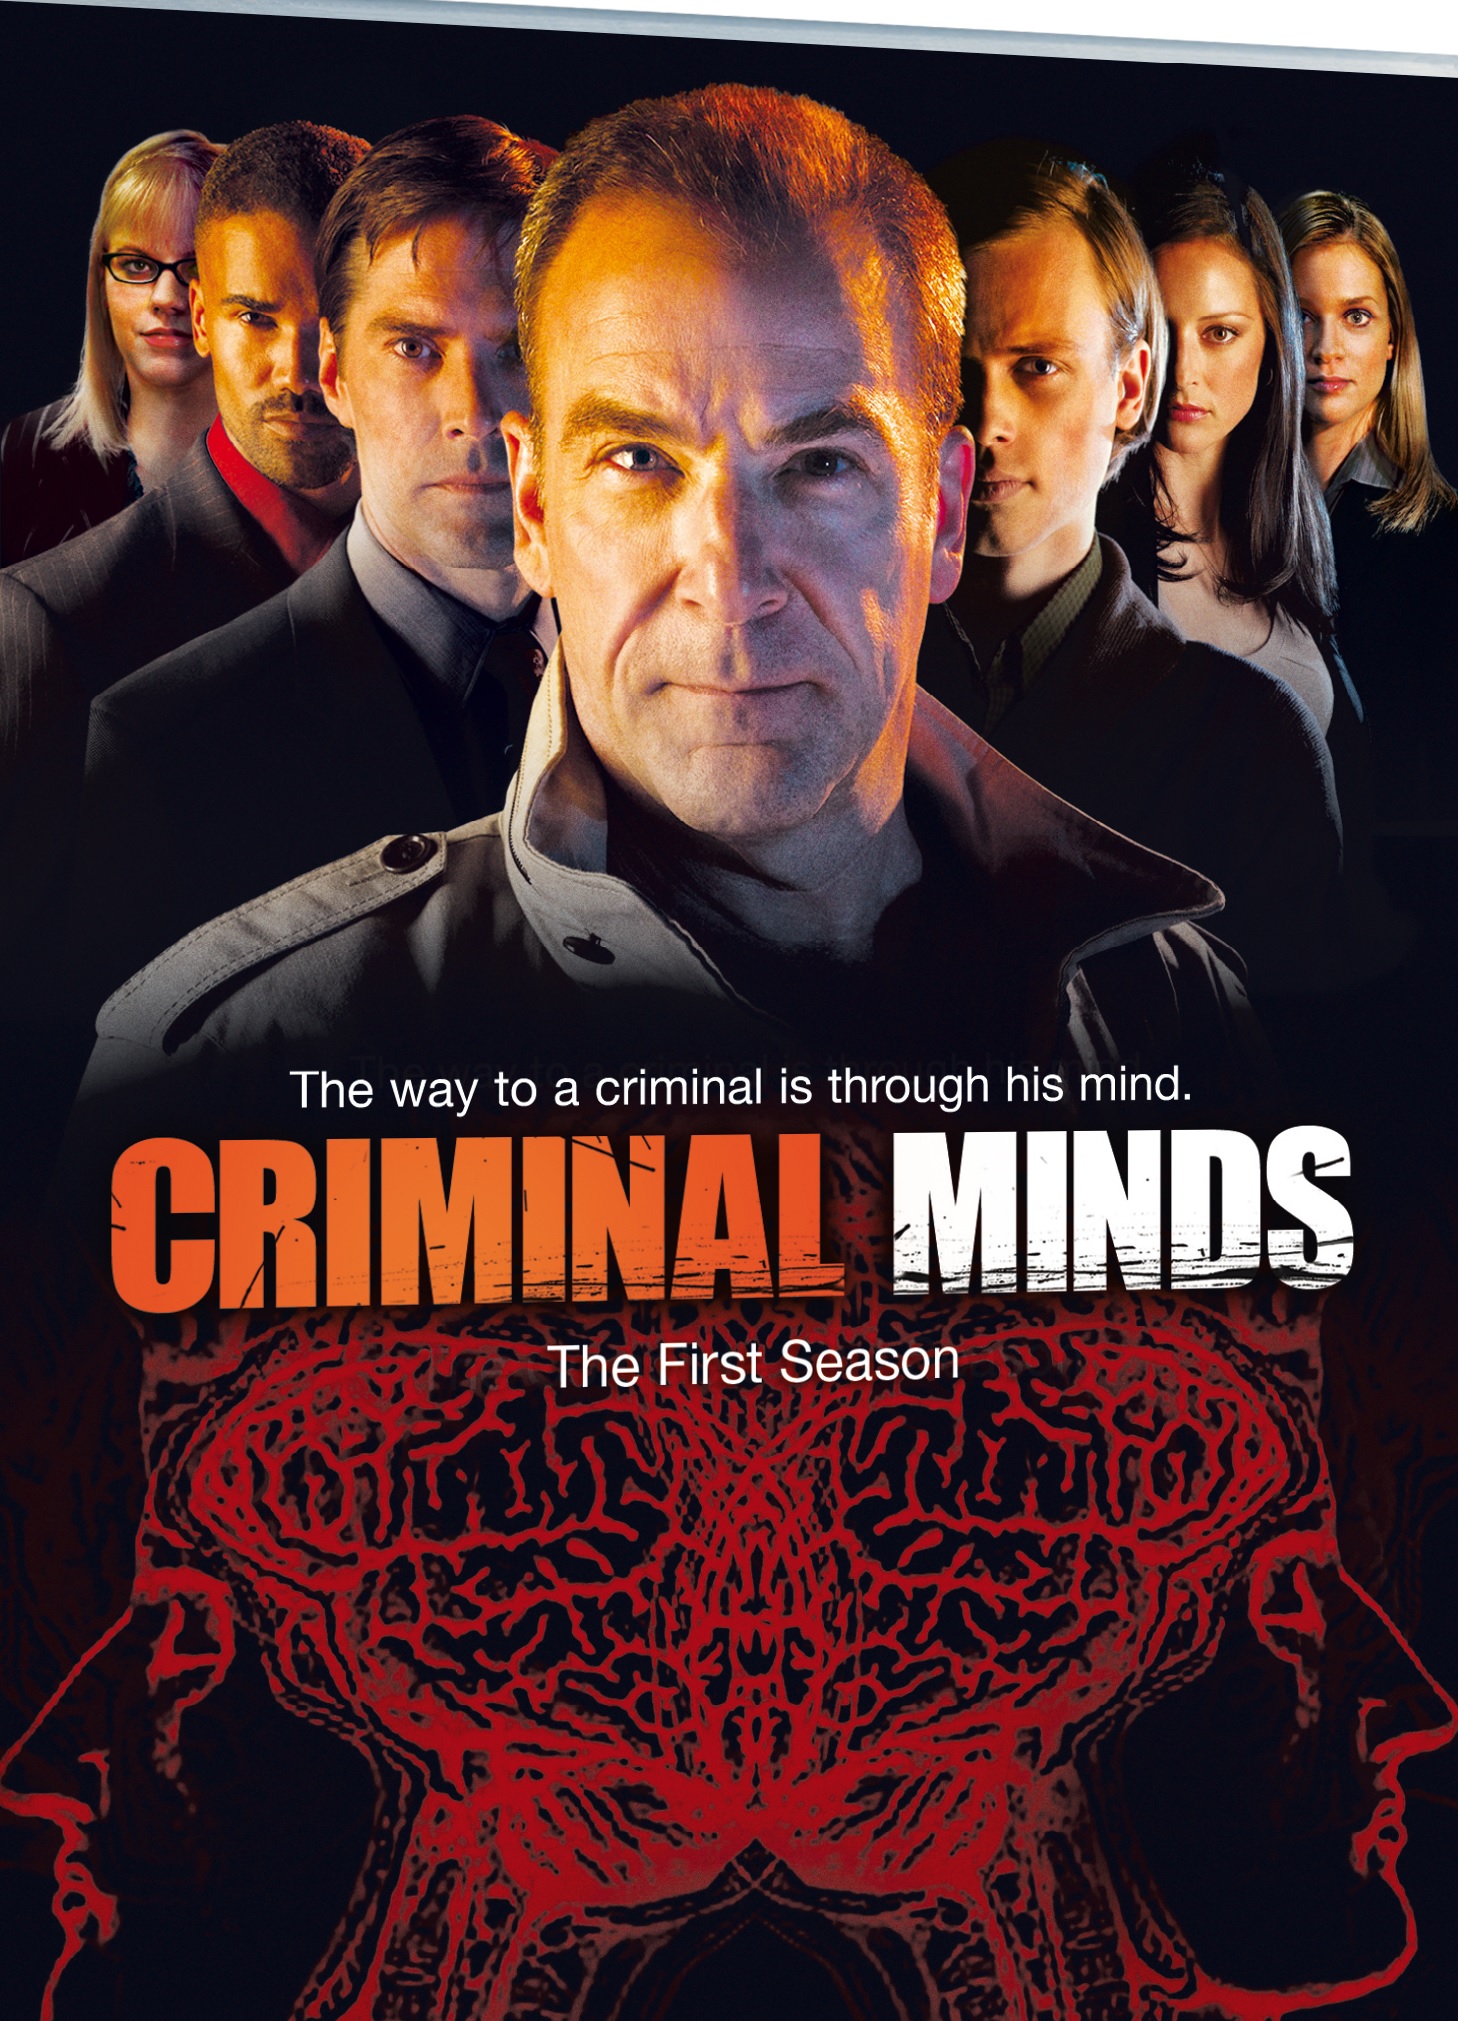 Criminal Minds Season 1 ทีมแกร่งเด็ดขั้วอาชญากรรม [ซับไทย]